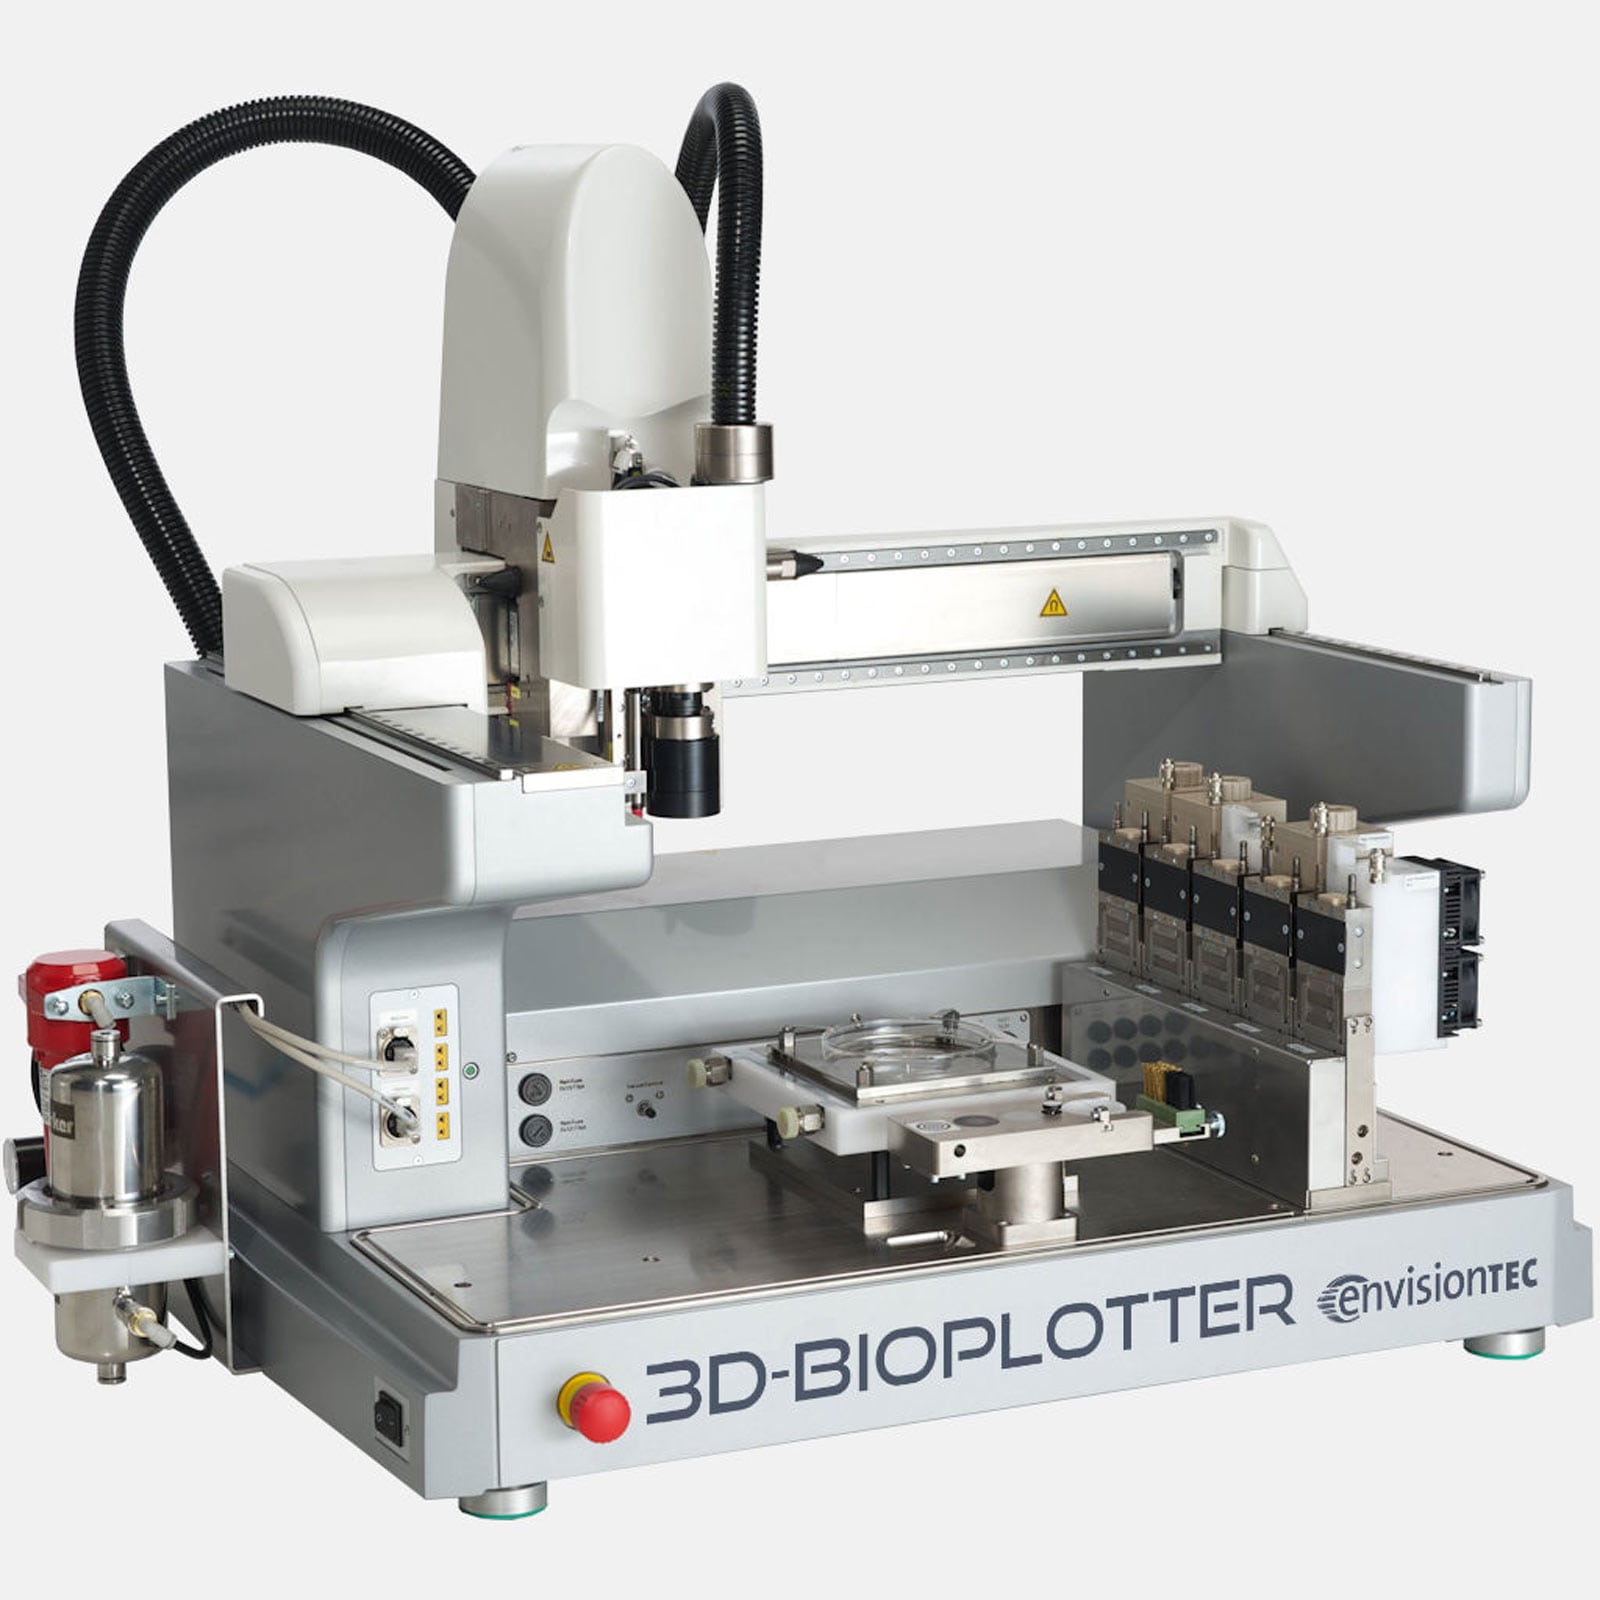 3D Bioprinter